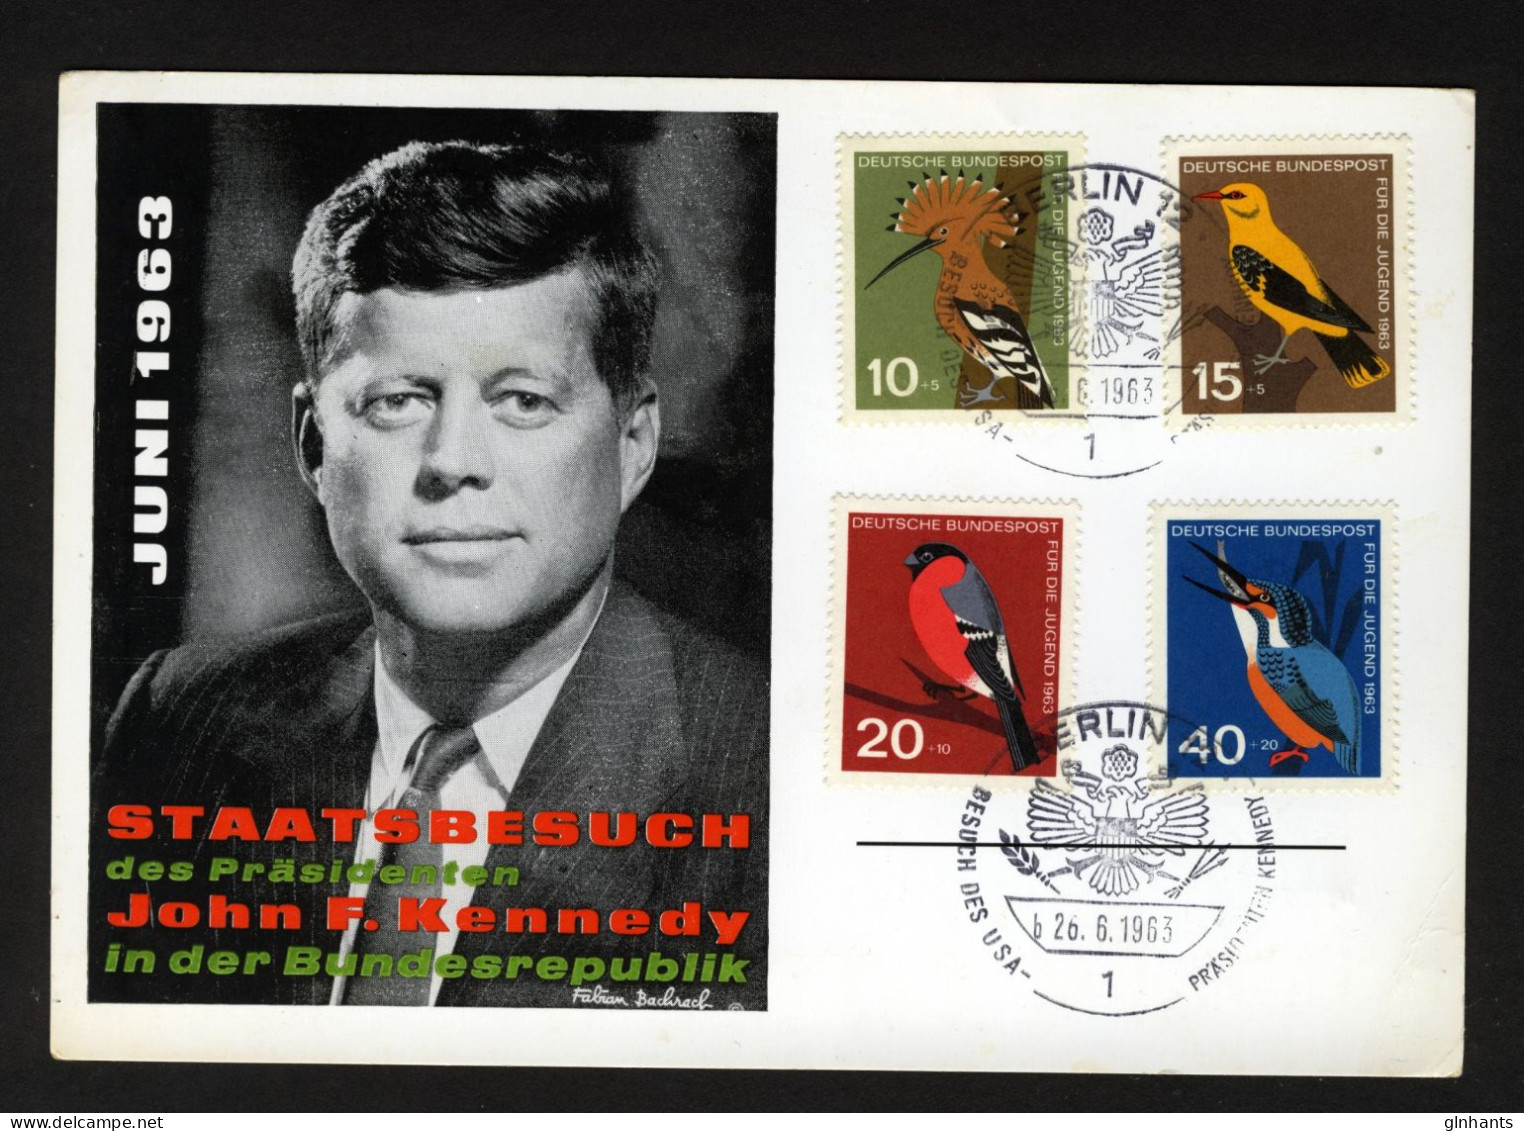 GERMANY - 1963 BIRDS ON KENNEDY JFK BERLIN VISIT CARD - Covers & Documents